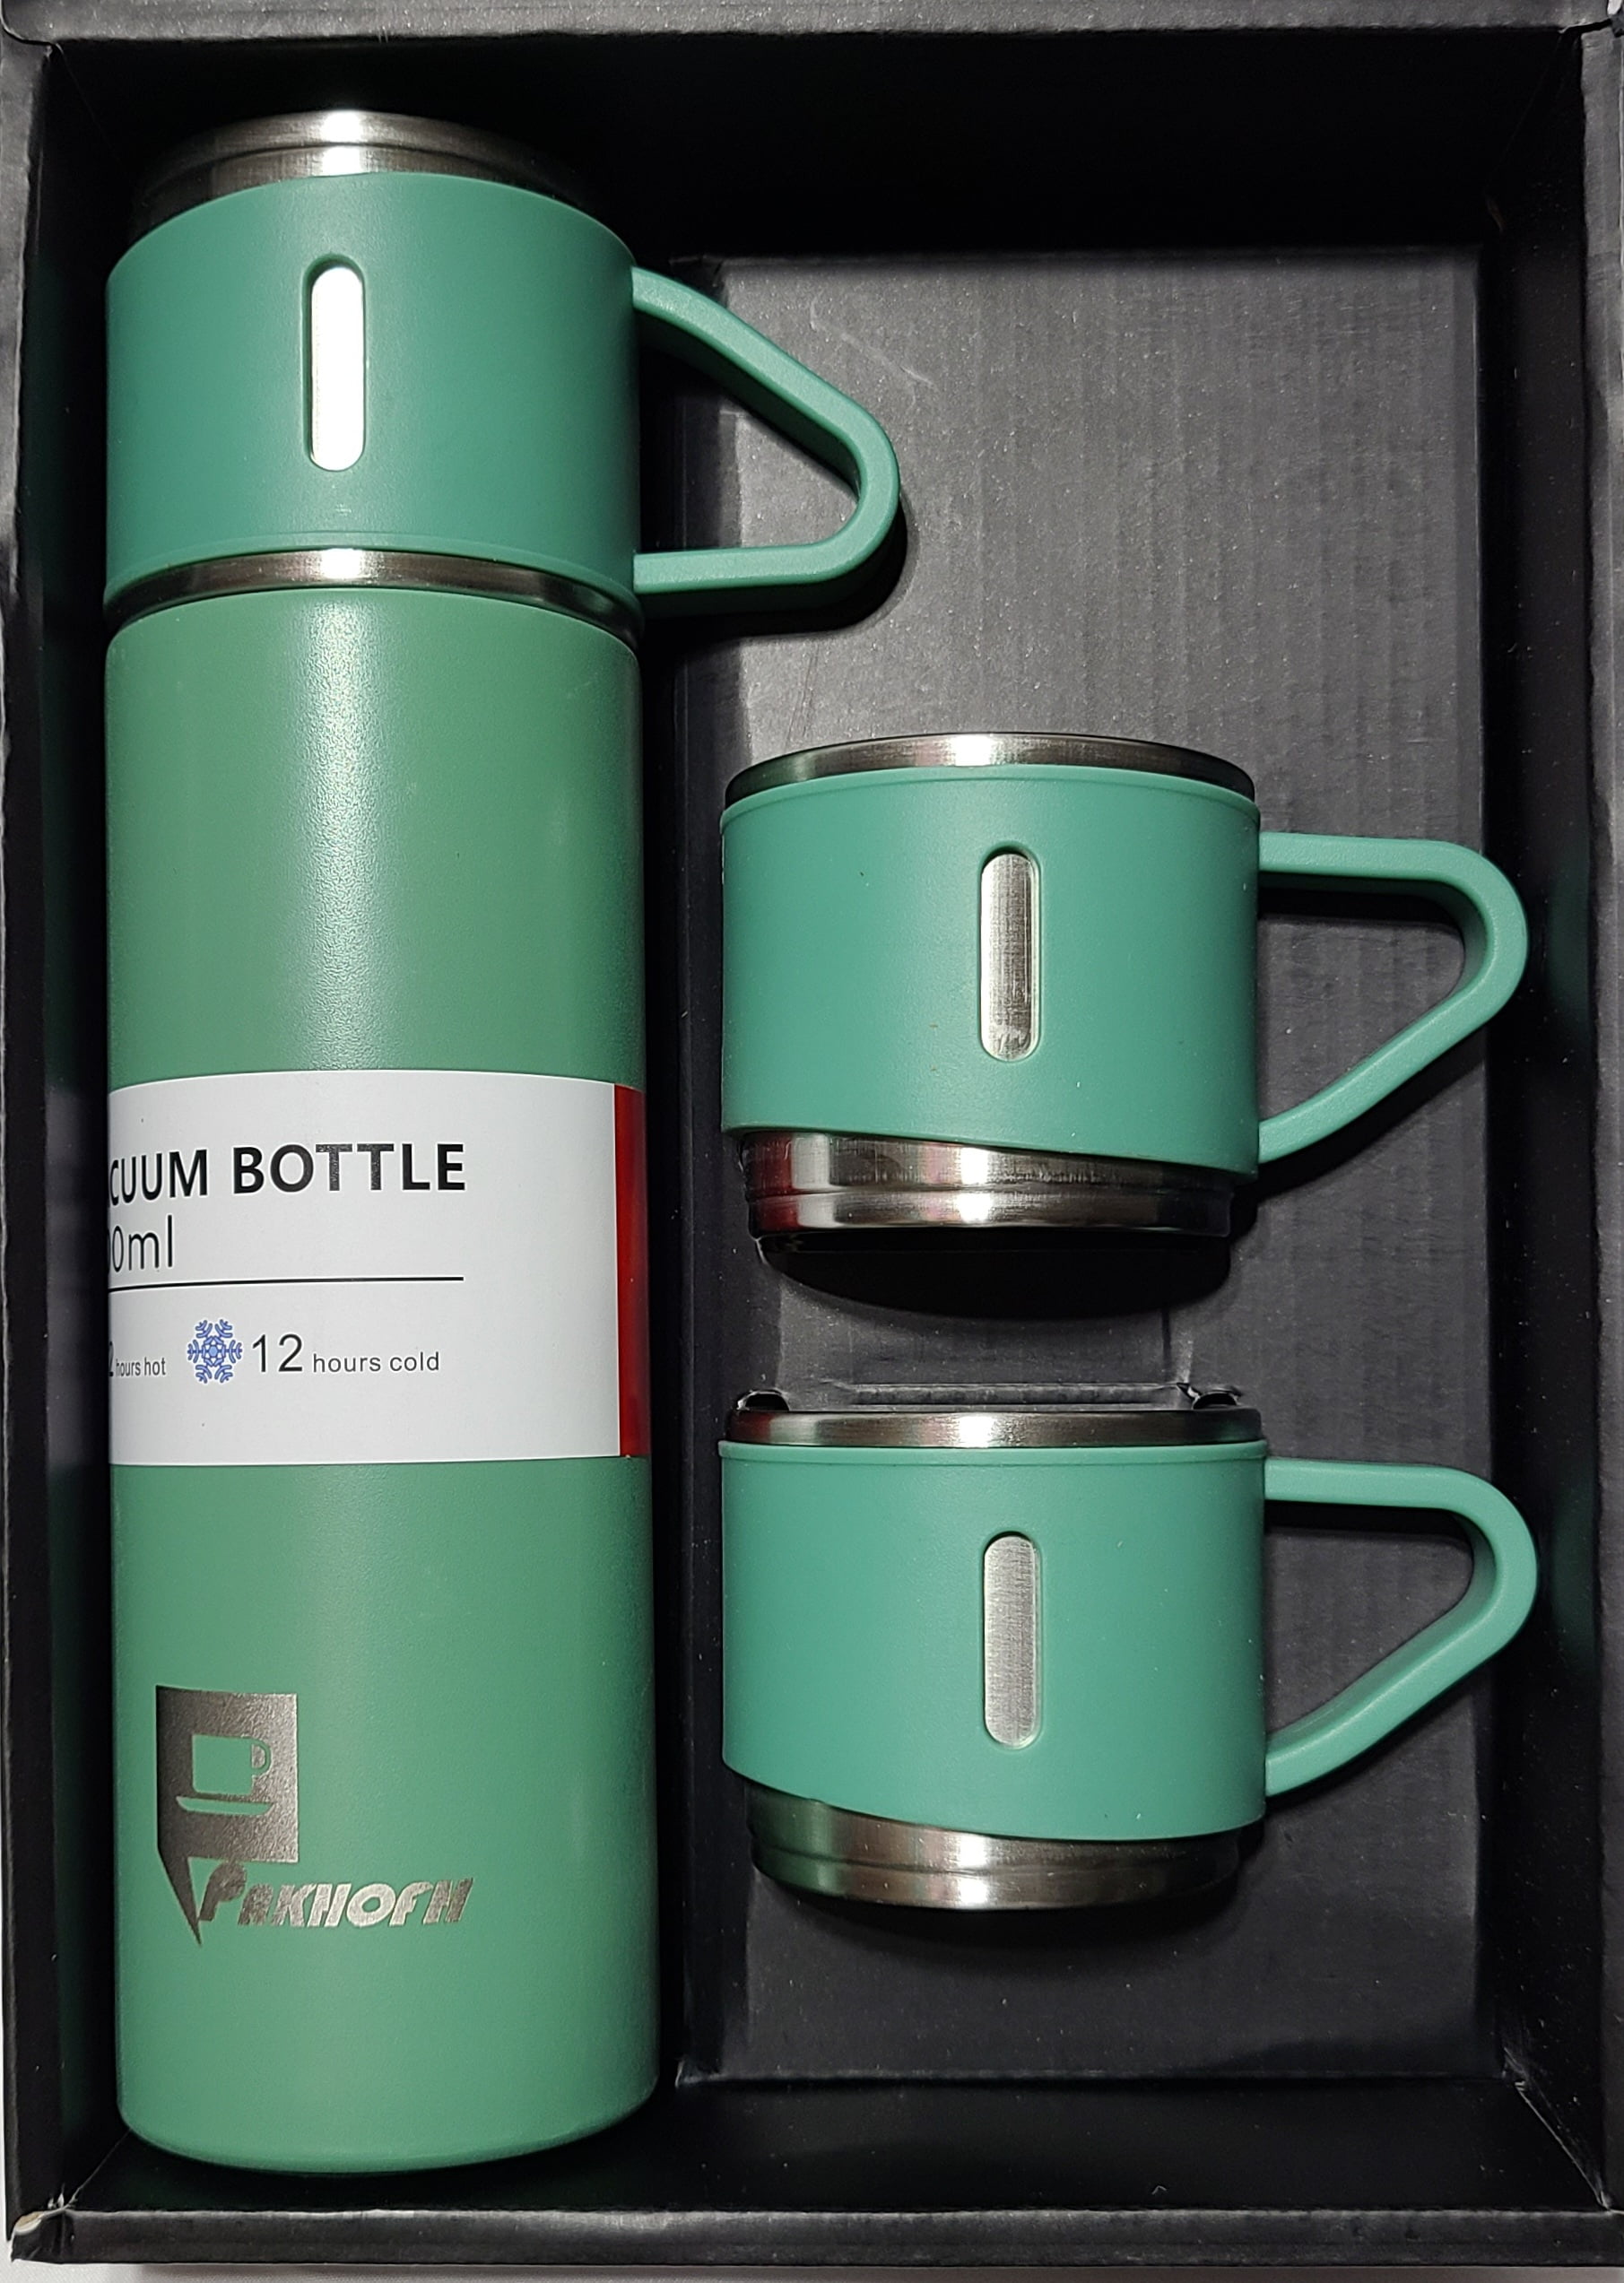 Vacuum Flask Set + 2 Cups